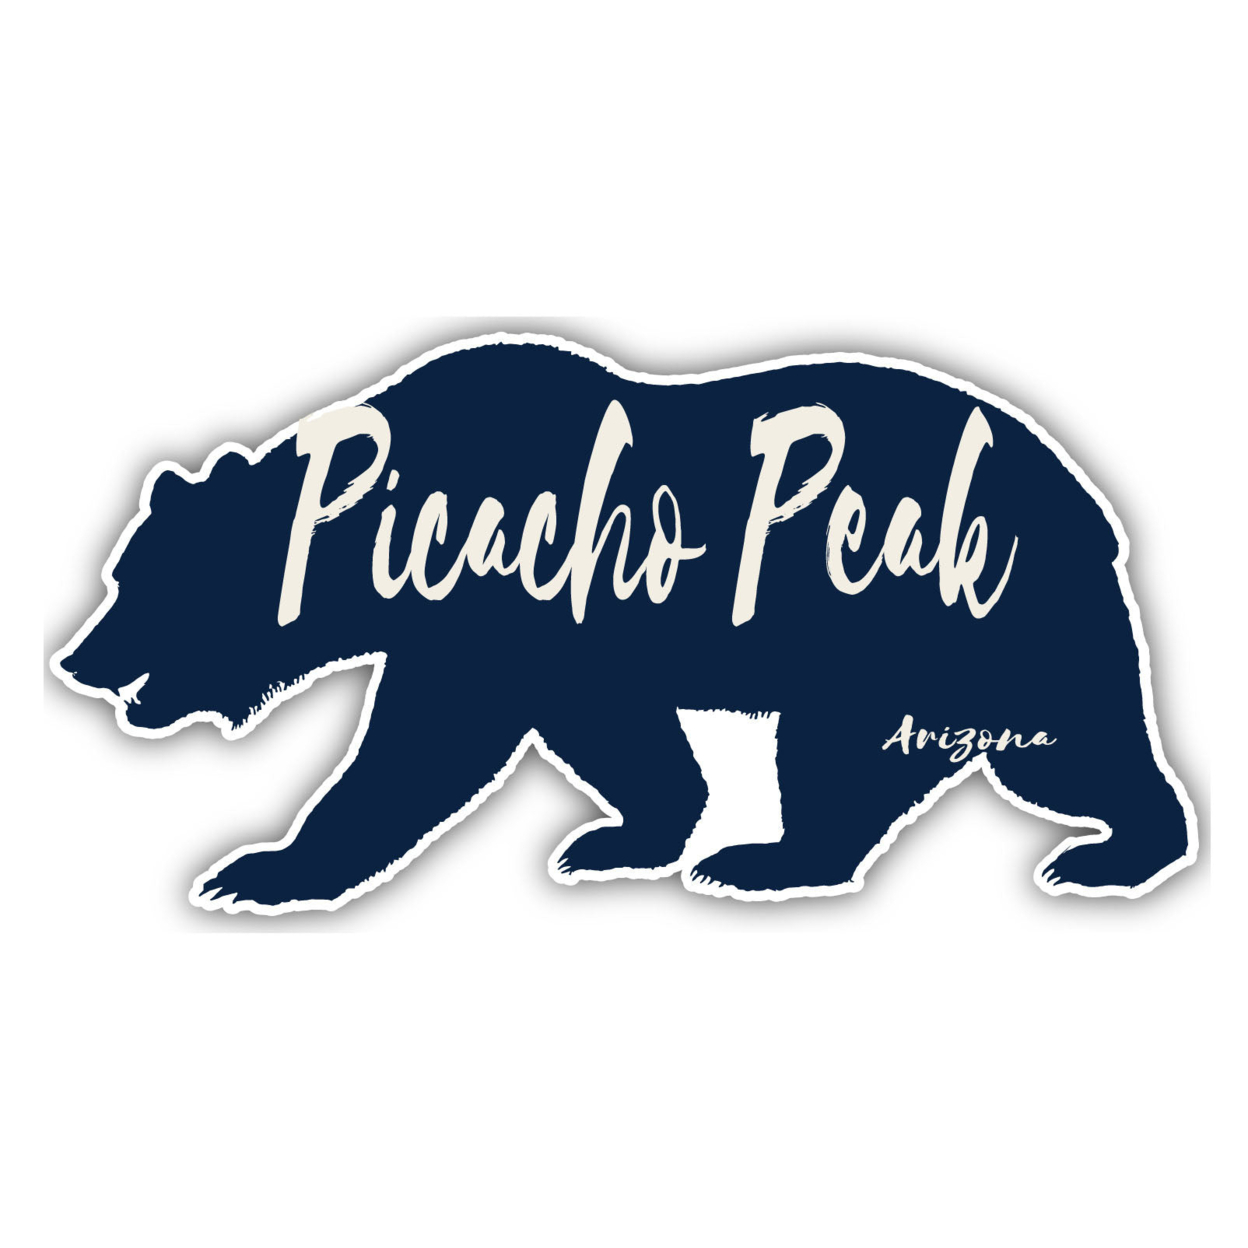 Picacho Peak Arizona Souvenir Decorative Stickers (Choose Theme And Size) - Single Unit, 4-Inch, Bear